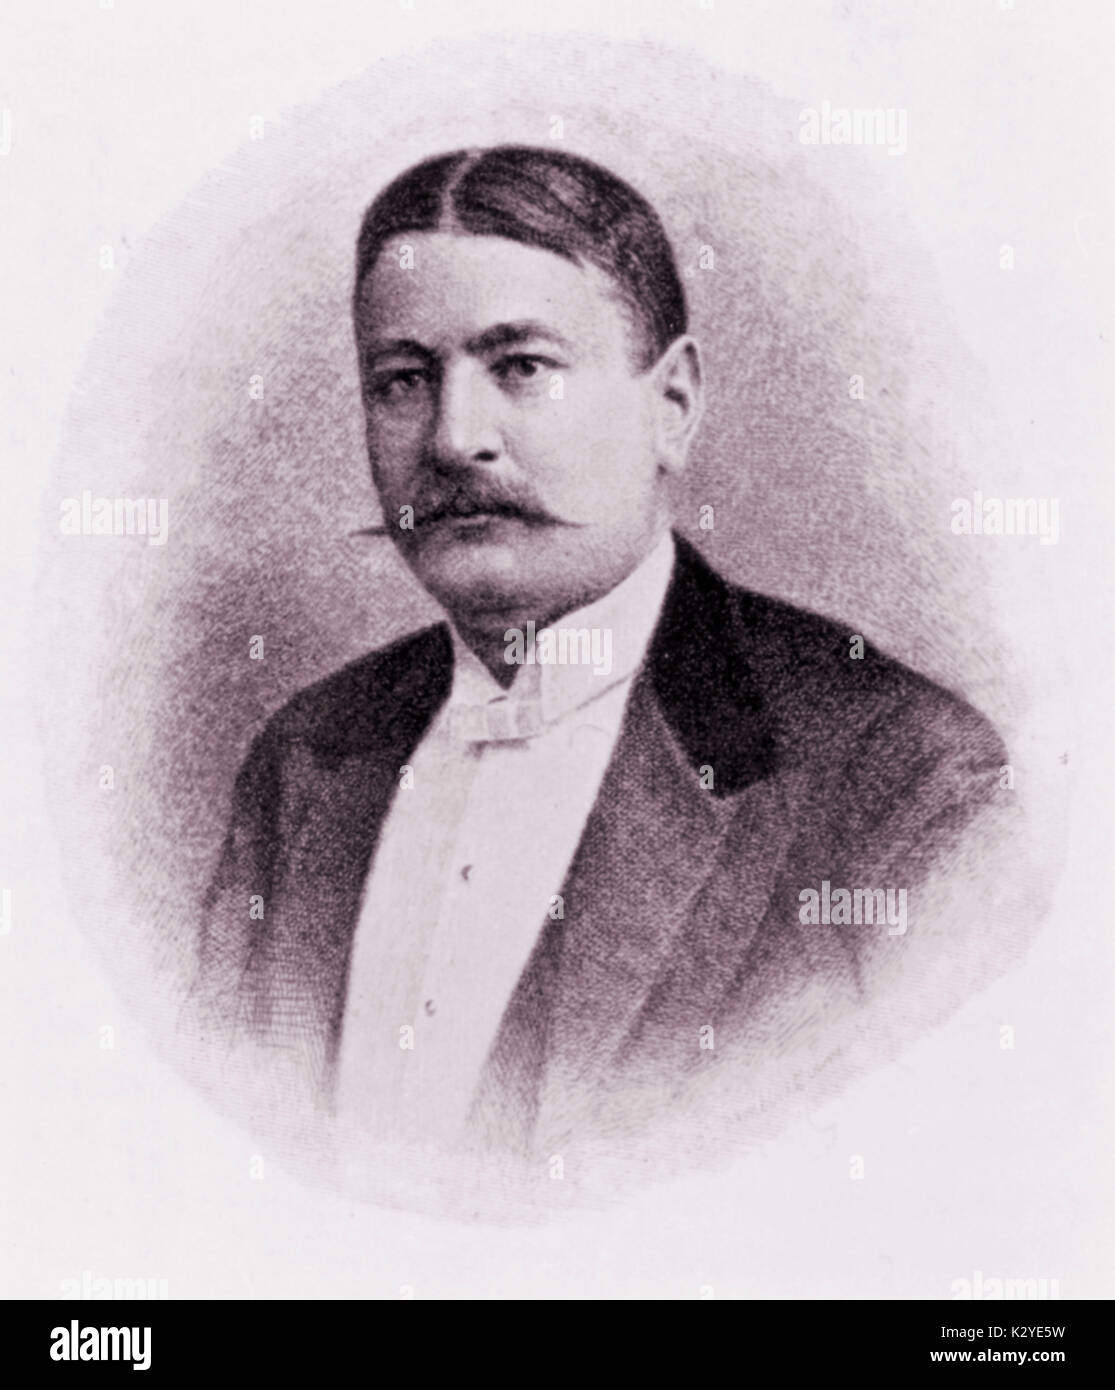 Max Burckhard - portrait. Austrian. Director of Burg Theater in Vienna (Viennese Burgtheater) 1890-98.  1854-1912. Stock Photo